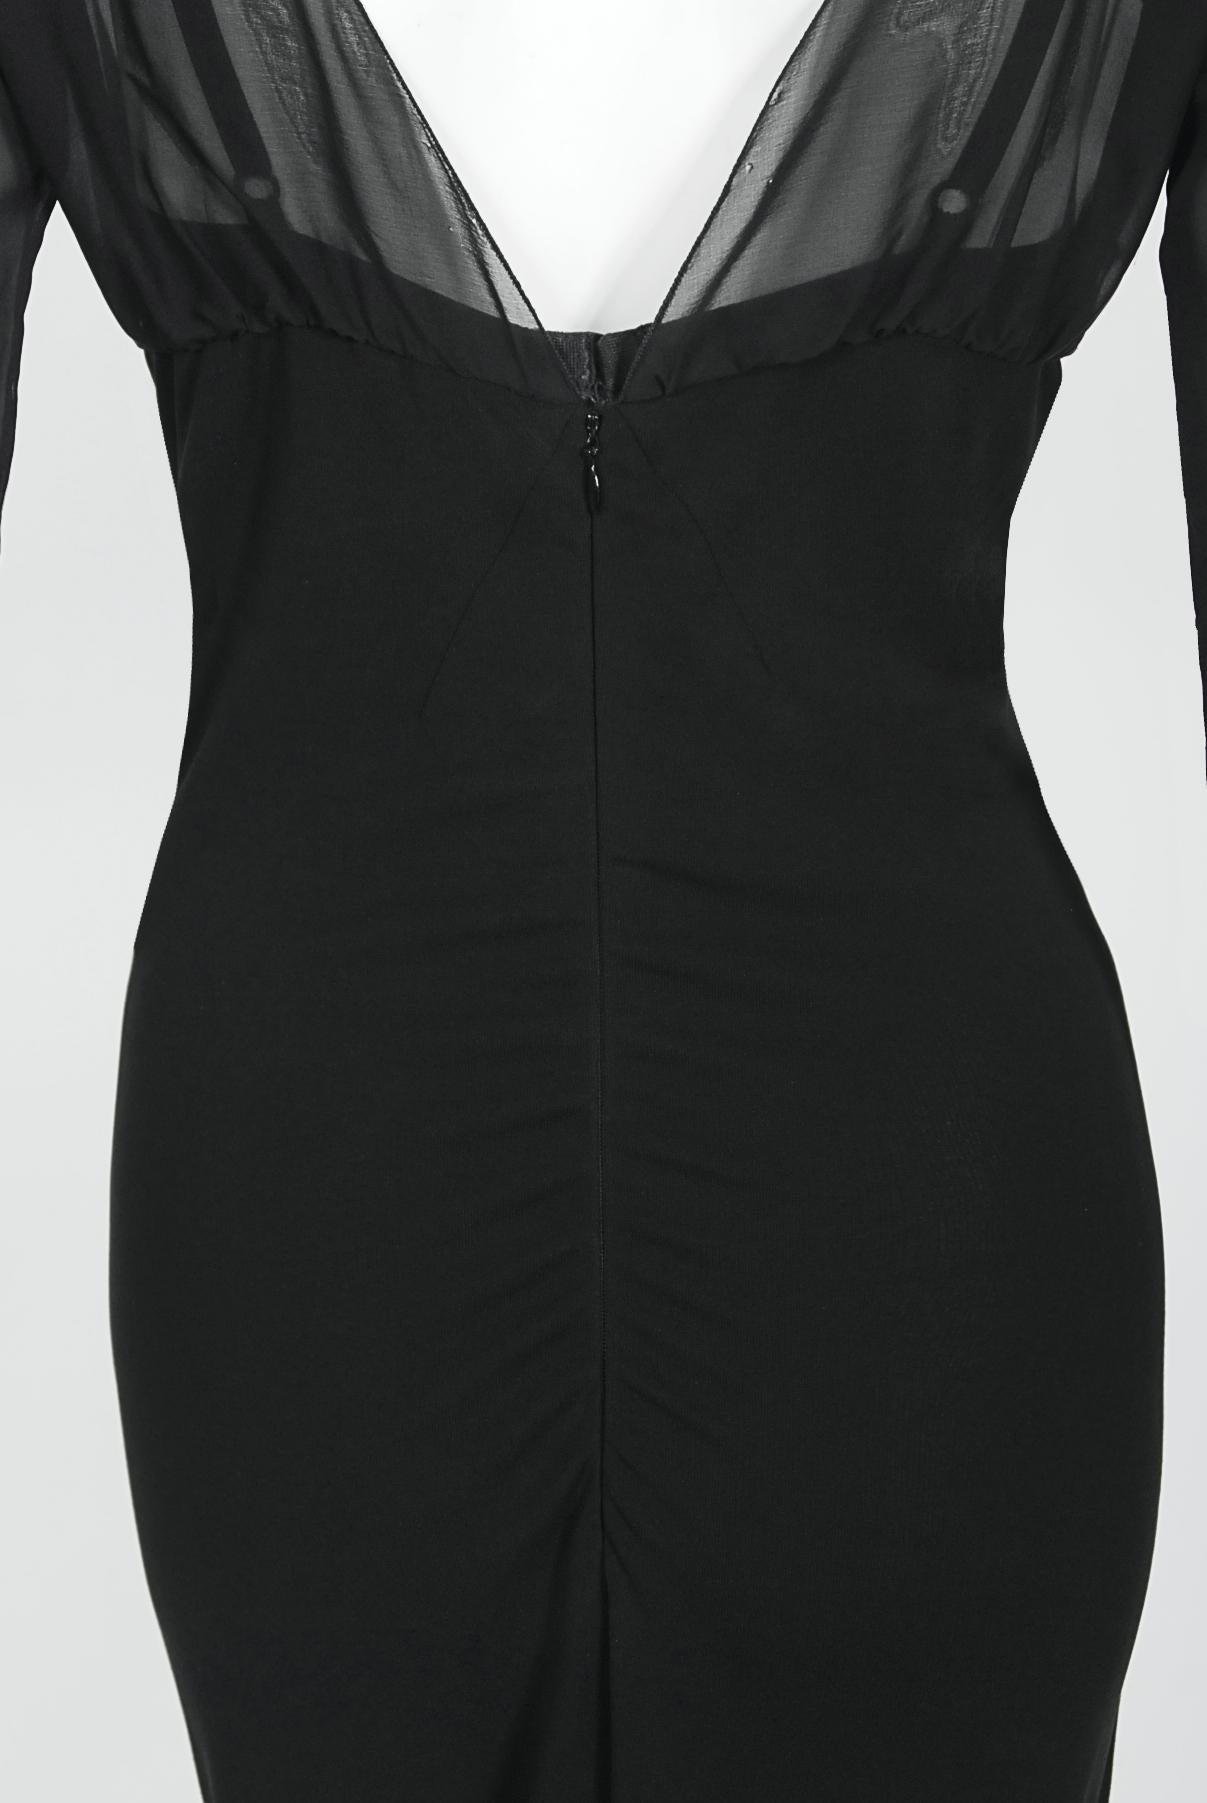 Vintage 2001 Dolce & Gabbana Sheer Black Silk Built-In Bra Plunge Hourglass Gown For Sale 8